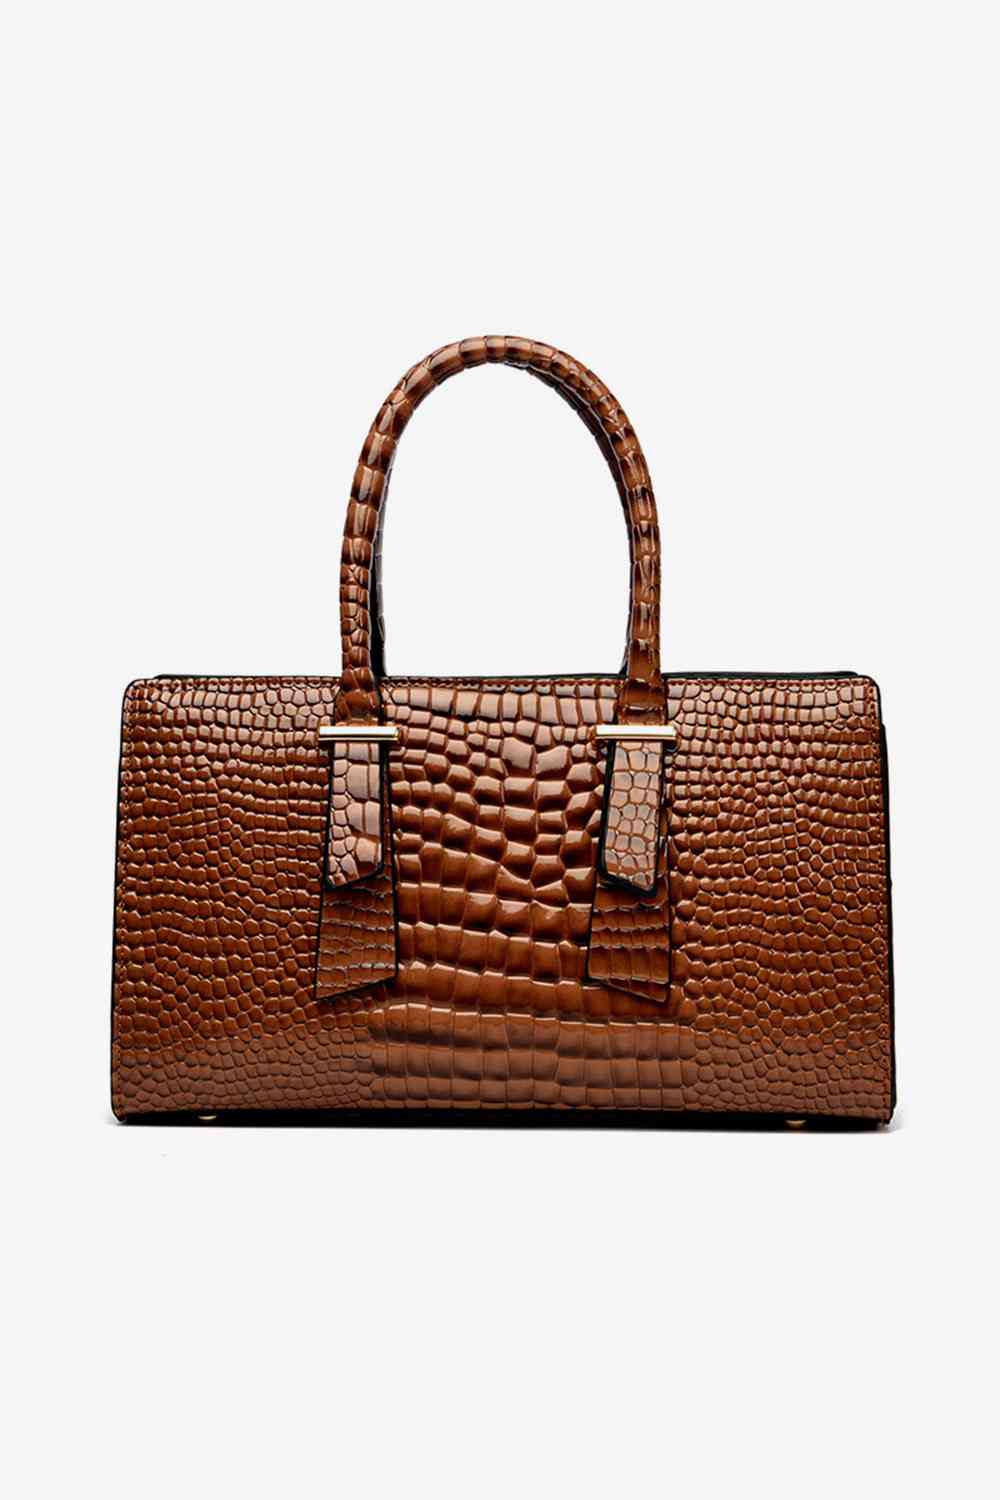 Textured PU Leather Handbag - TRENDMELO